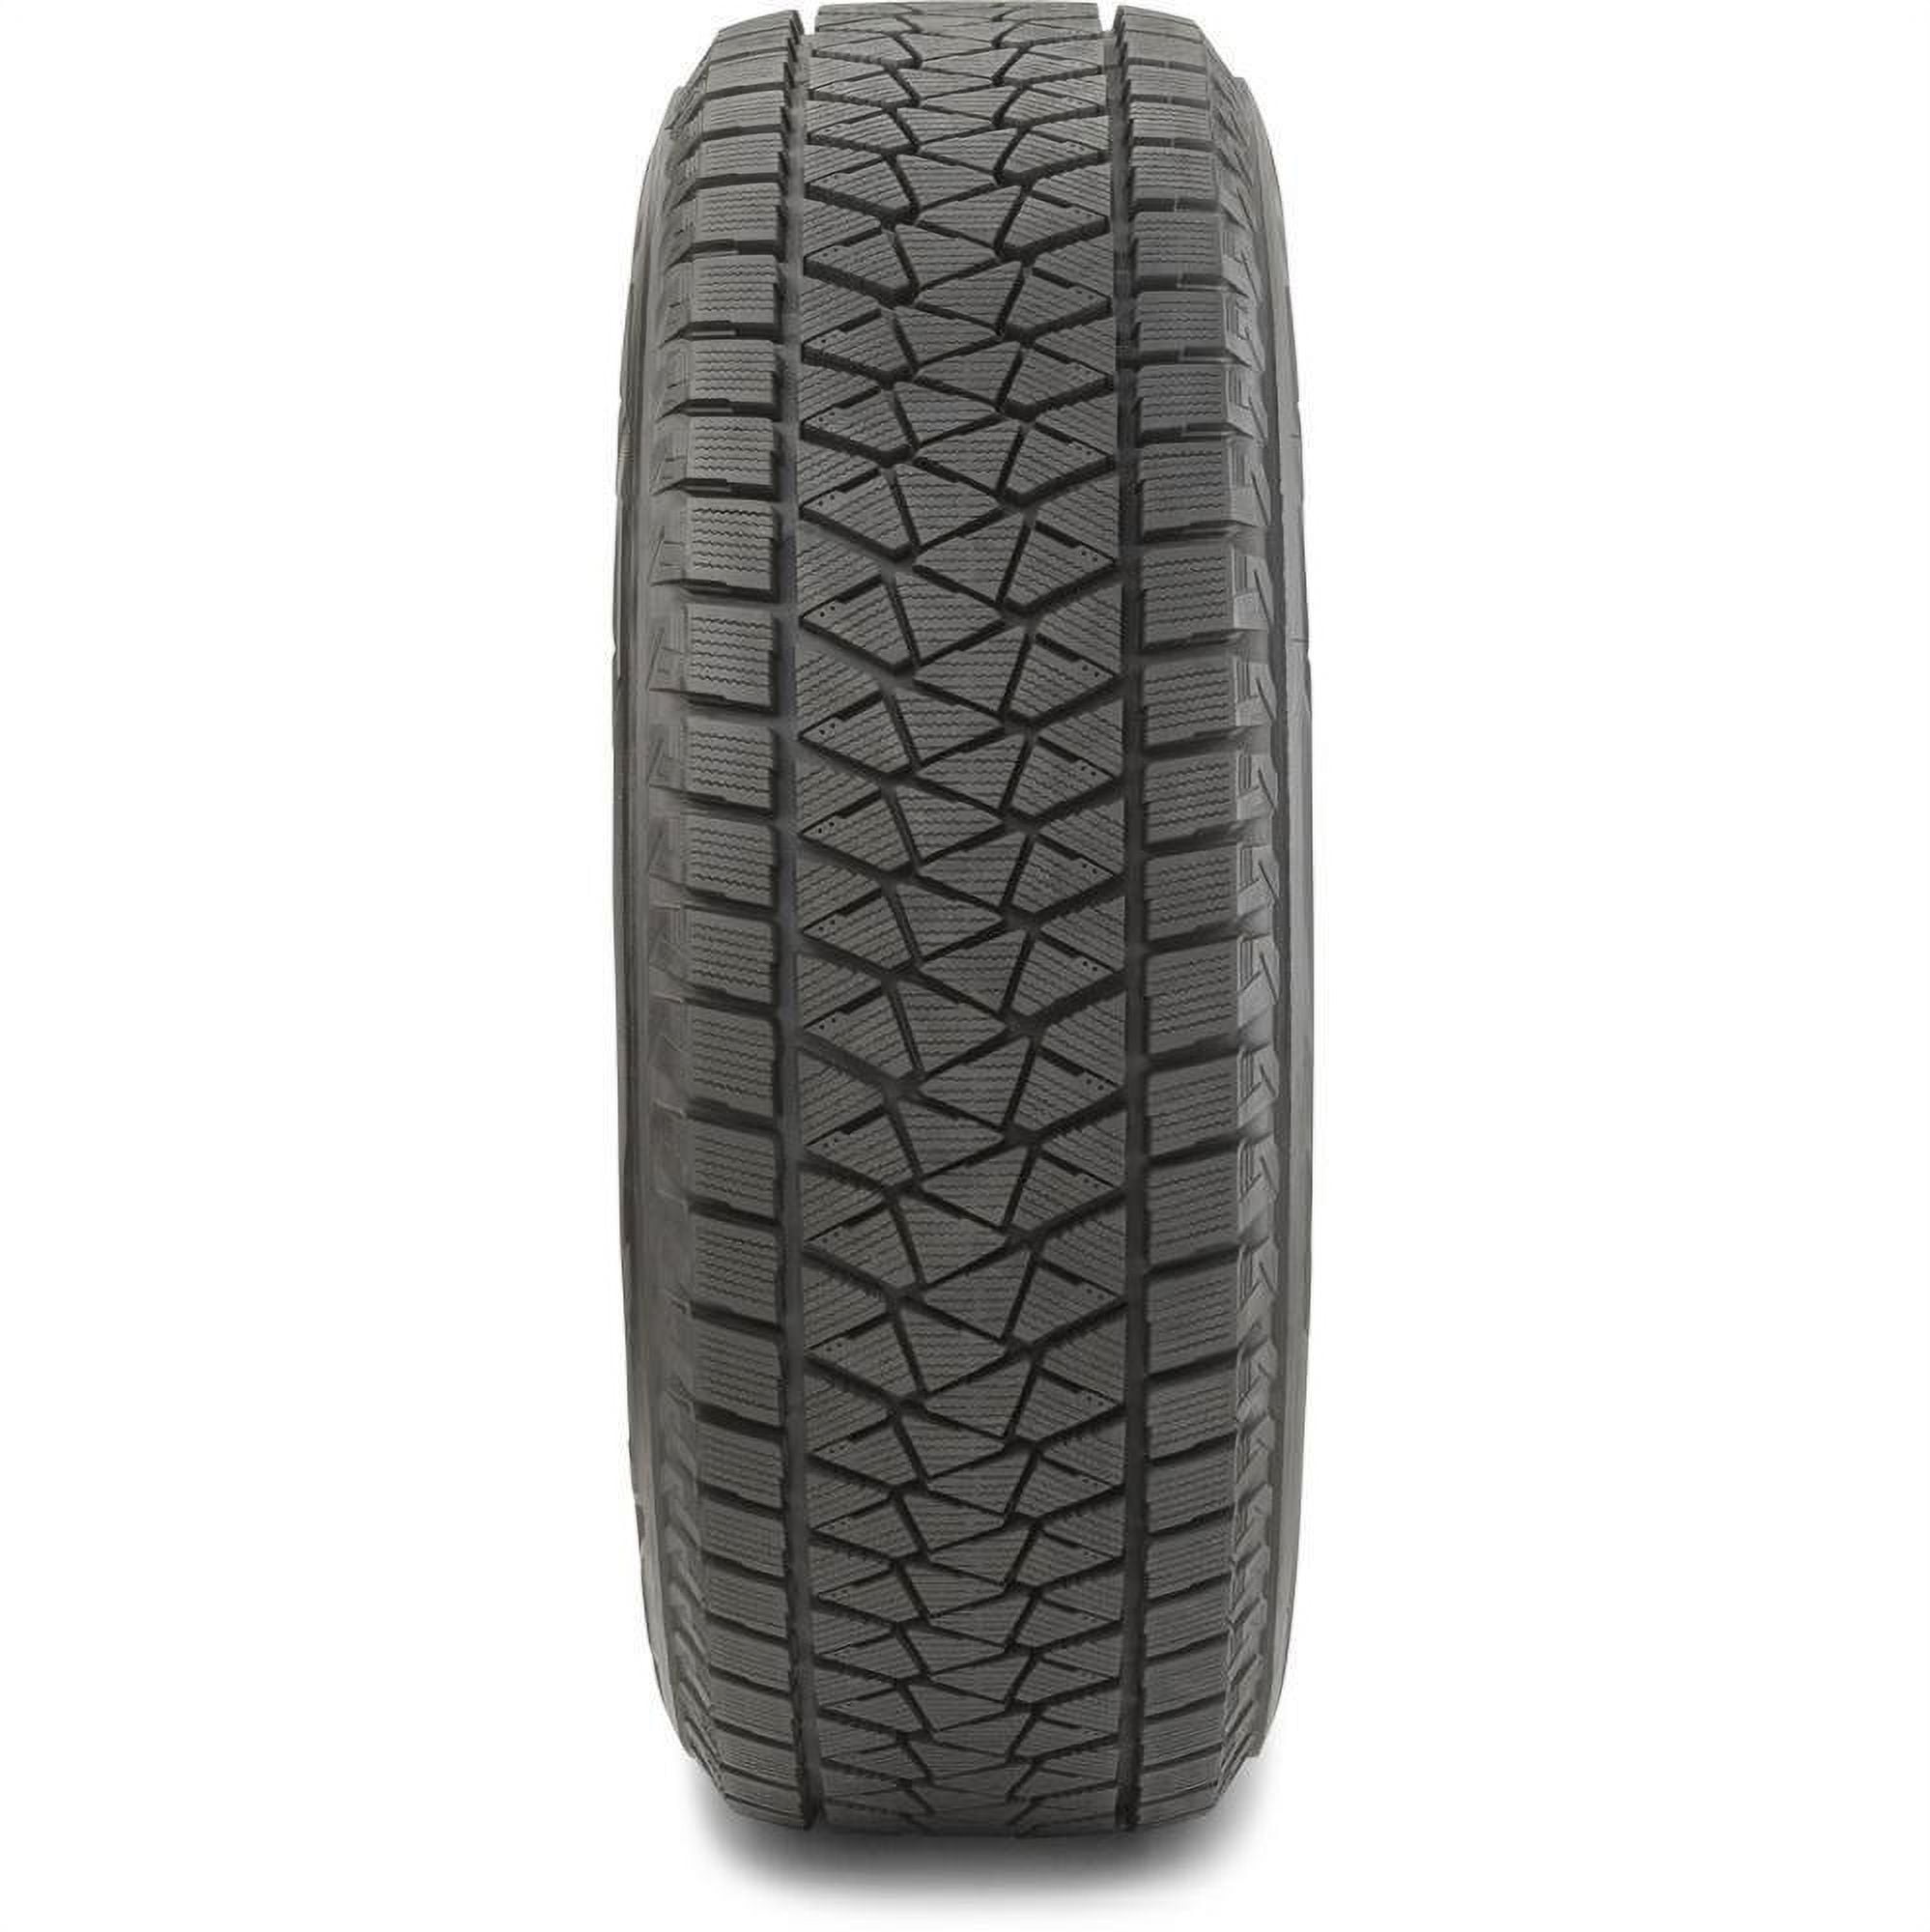 Bridgestone blizzak dm-v2 LT285/60R18 116R bsw winter tire